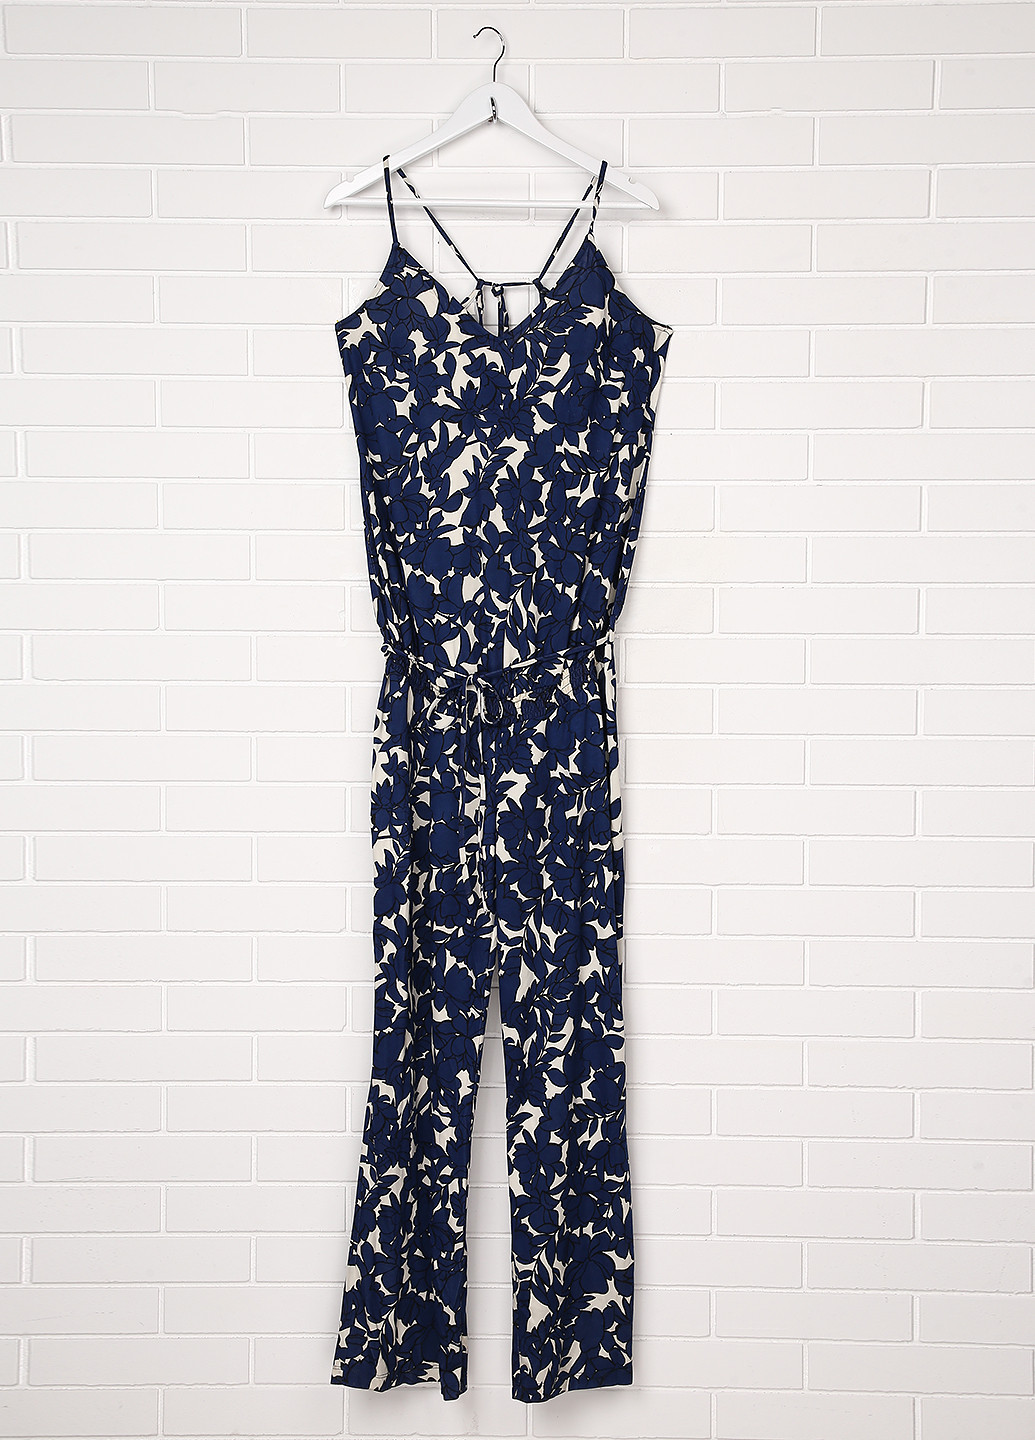 Комбинезон для беременных H&M комбинезон-брюки цветочный тёмно-синий кэжуал